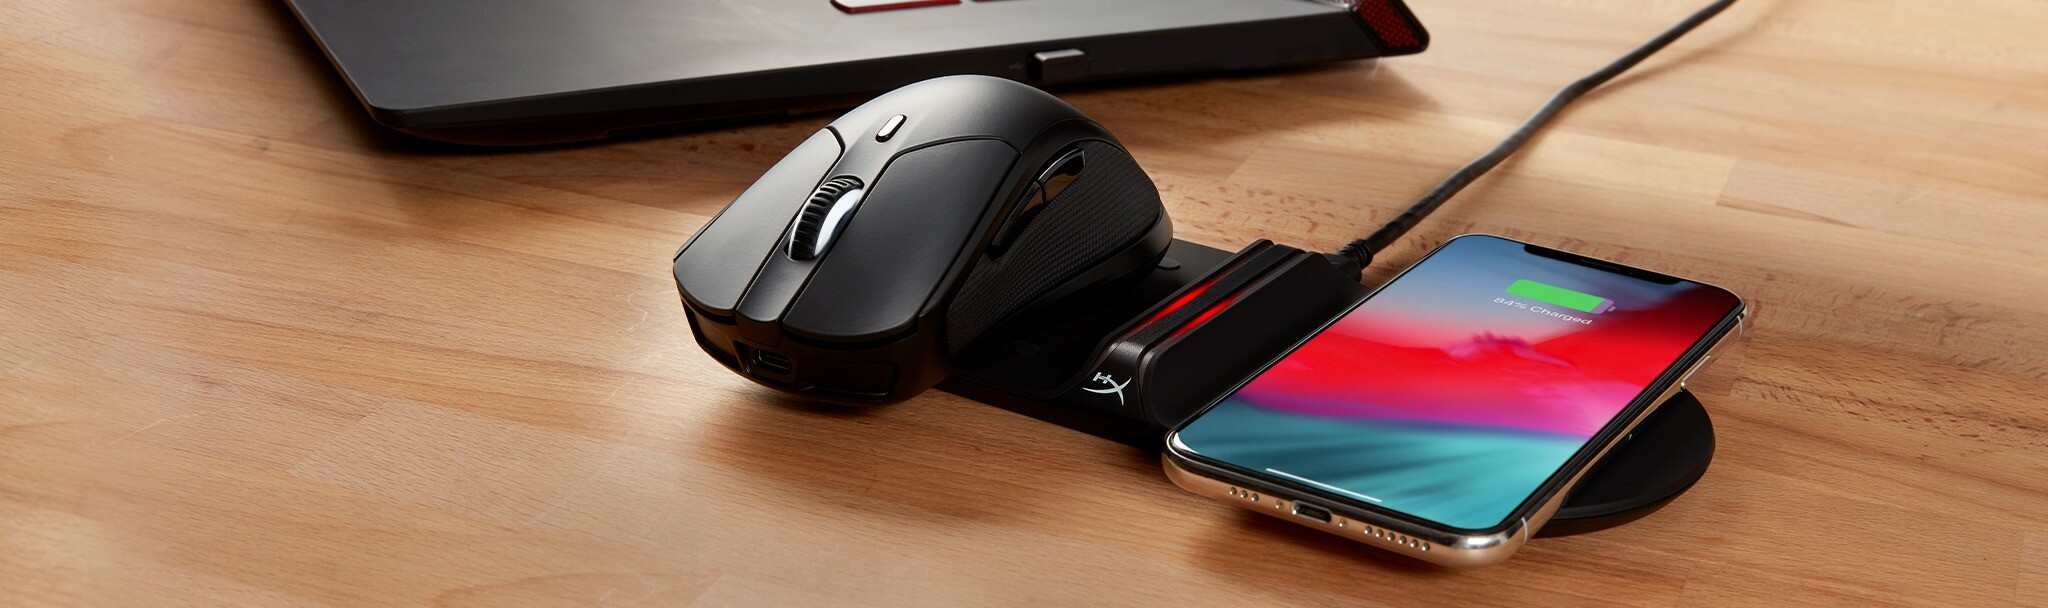 Hyperx-Pulsefire-Dart-Wireless-RGB-Gaming-Mouse